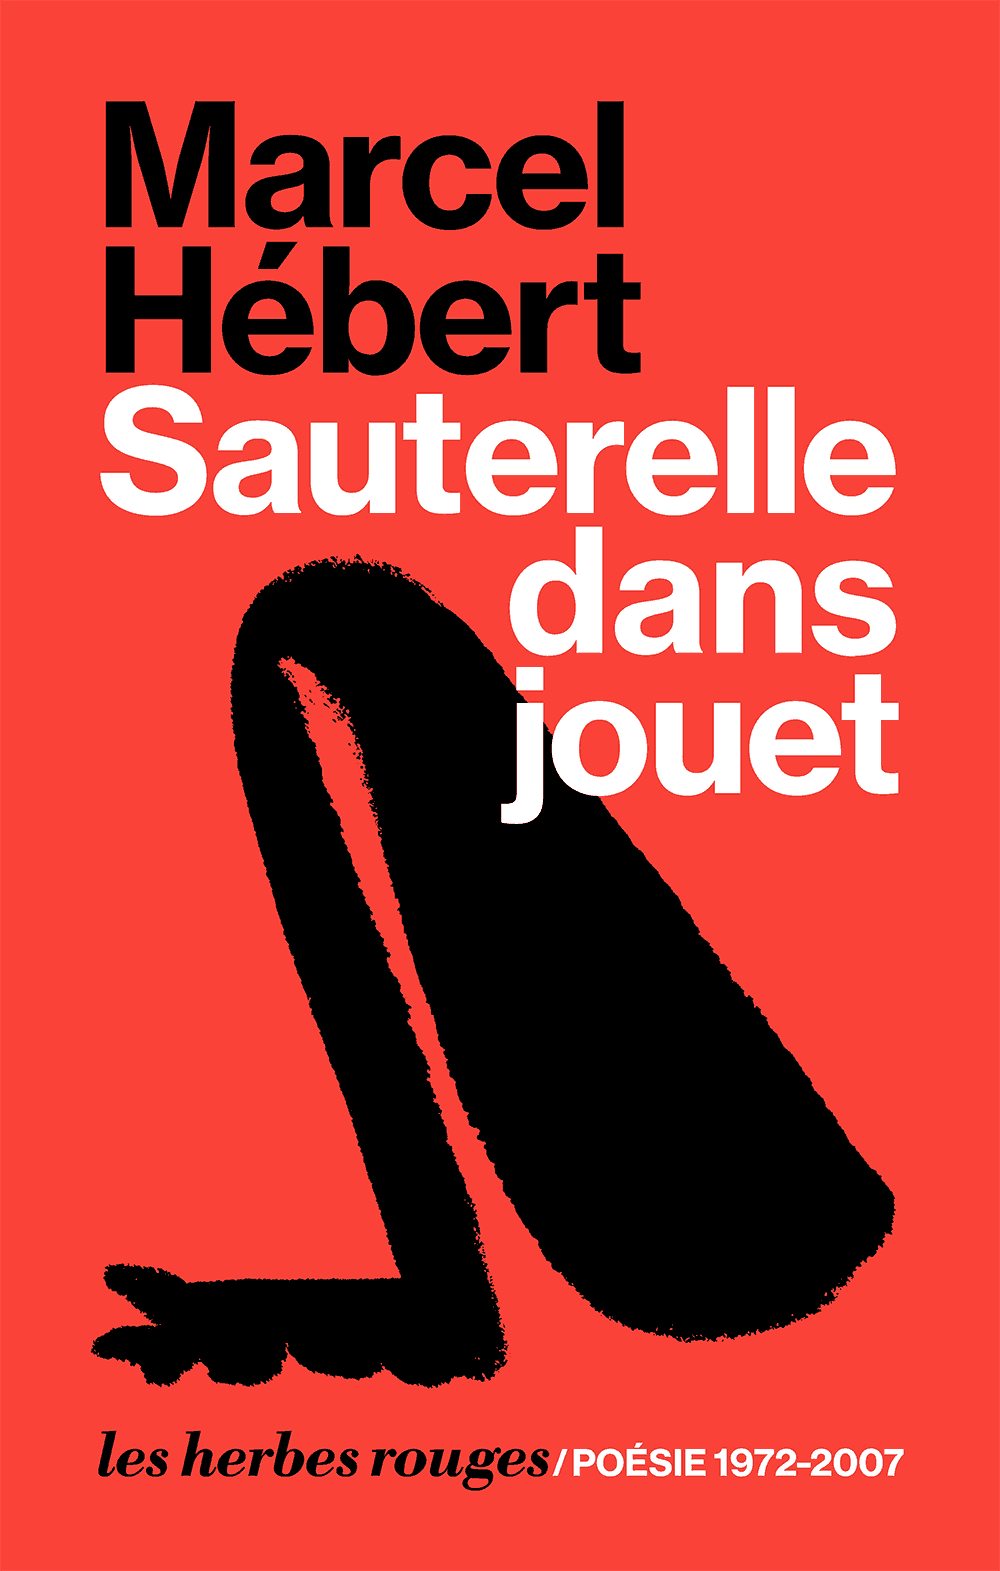 Marcel Hébert — Sauterelle dans jouet